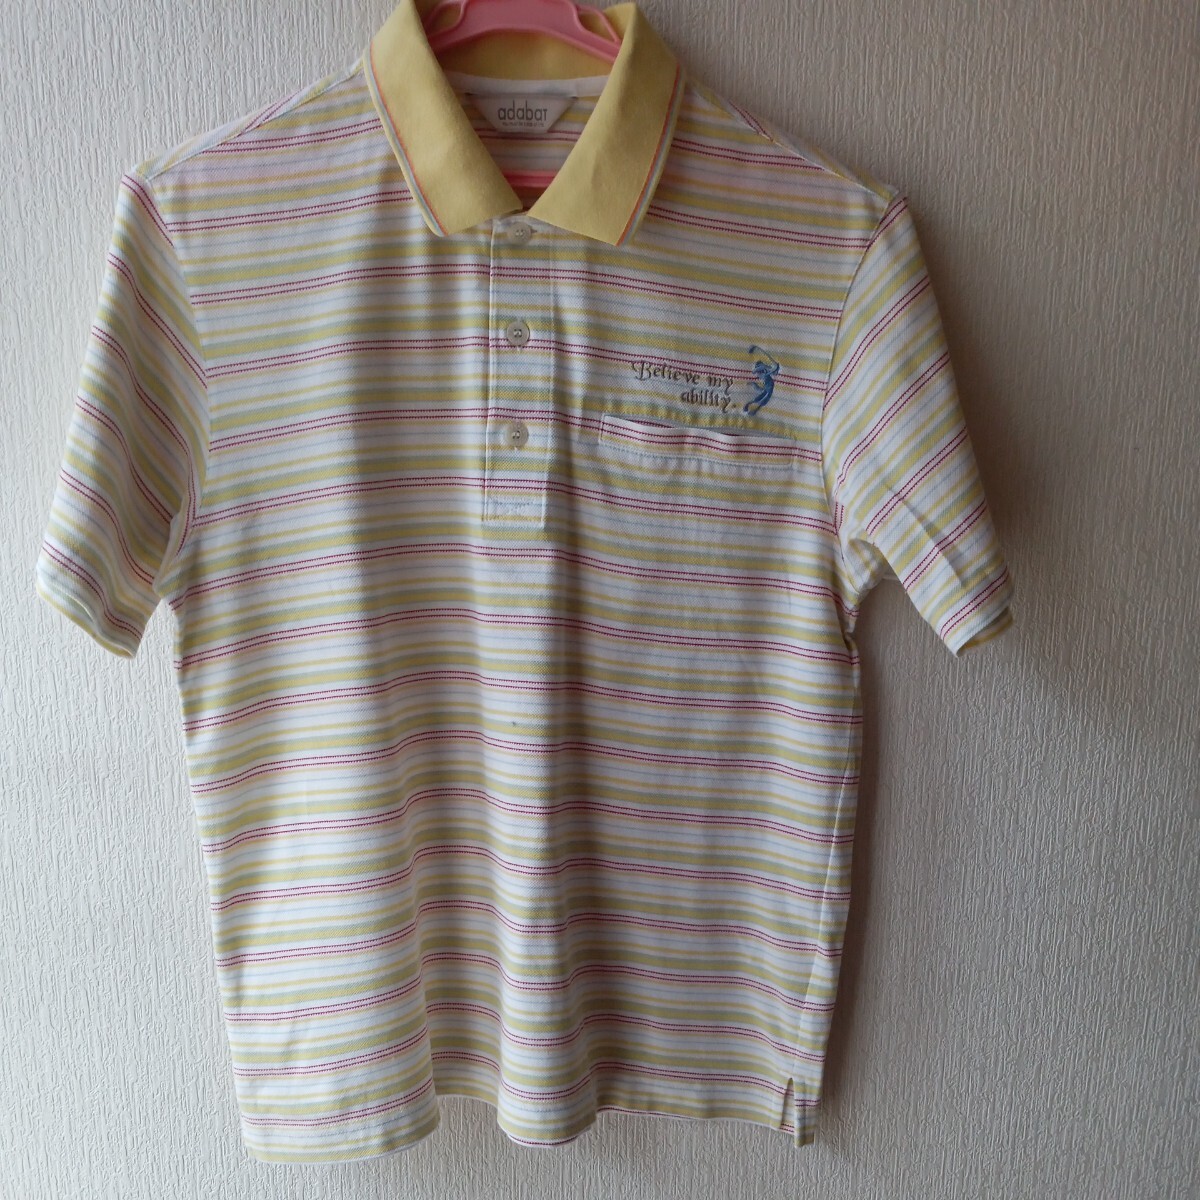 Adabat　ゴルフウェア　半袖ポロシャツ　サイズ46　白、赤、黄、青のボーダー柄　美品